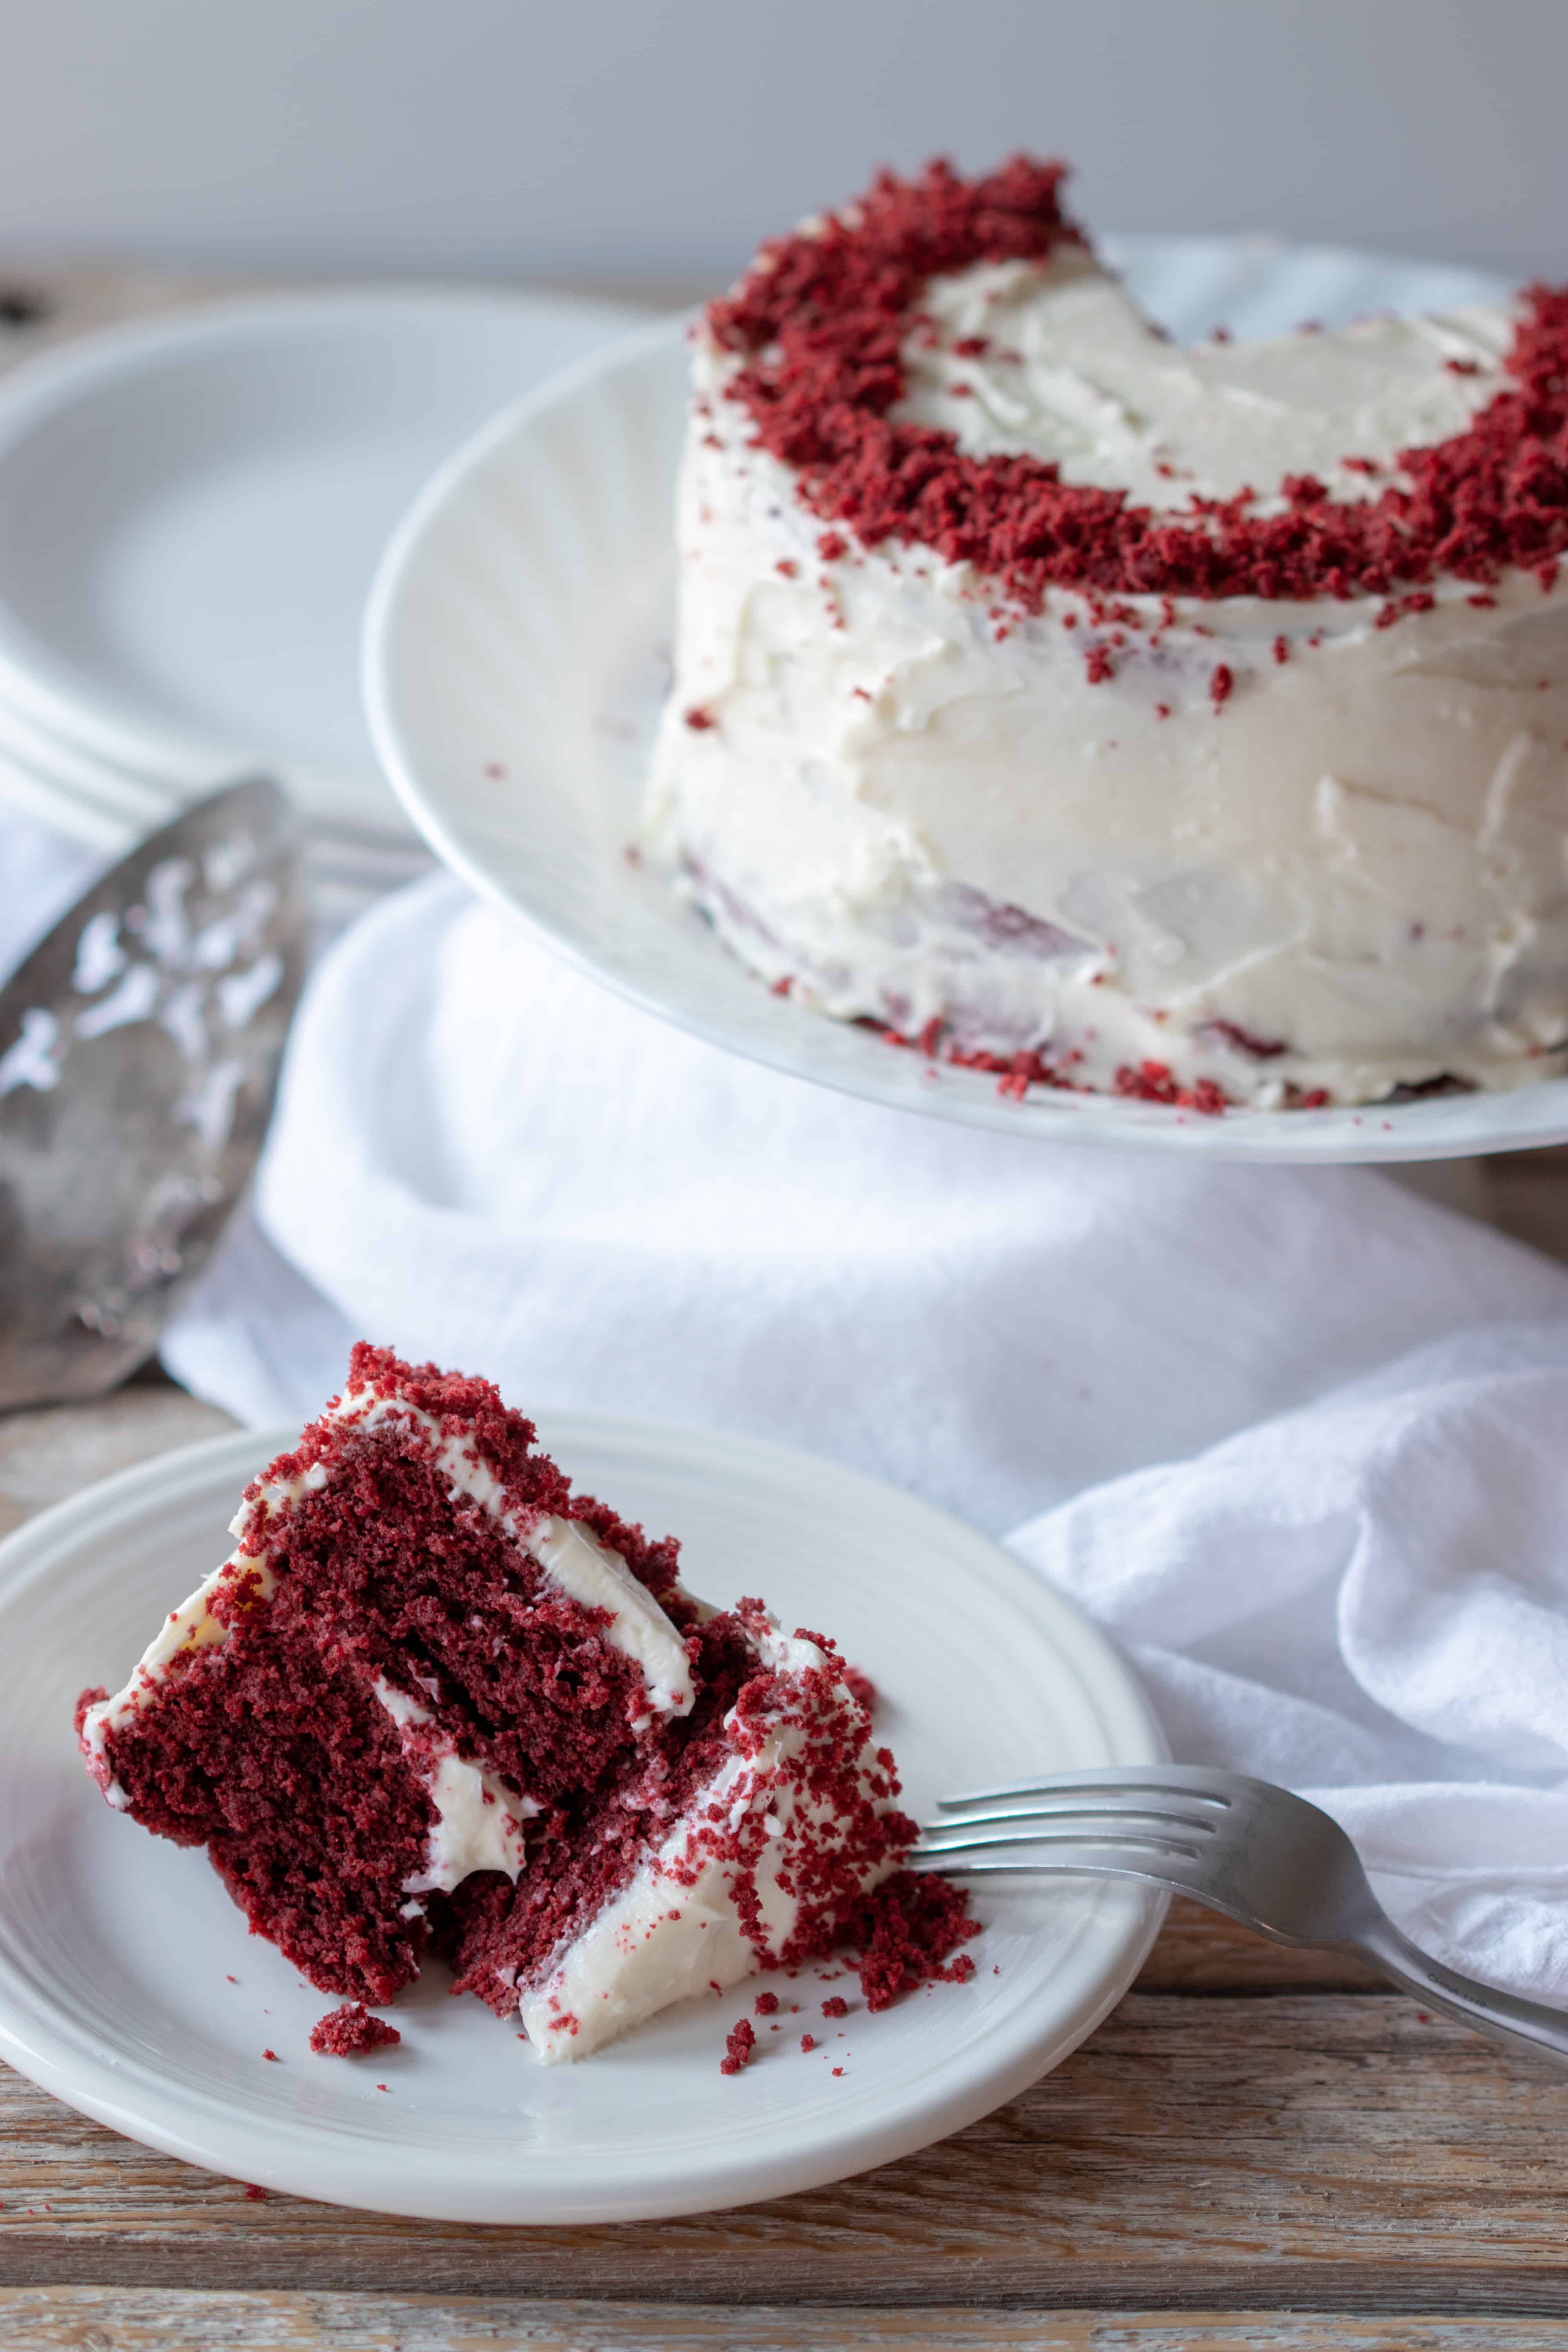 How to Make Sugar Free Red Velvet Cake - Keto Friendly Cake!